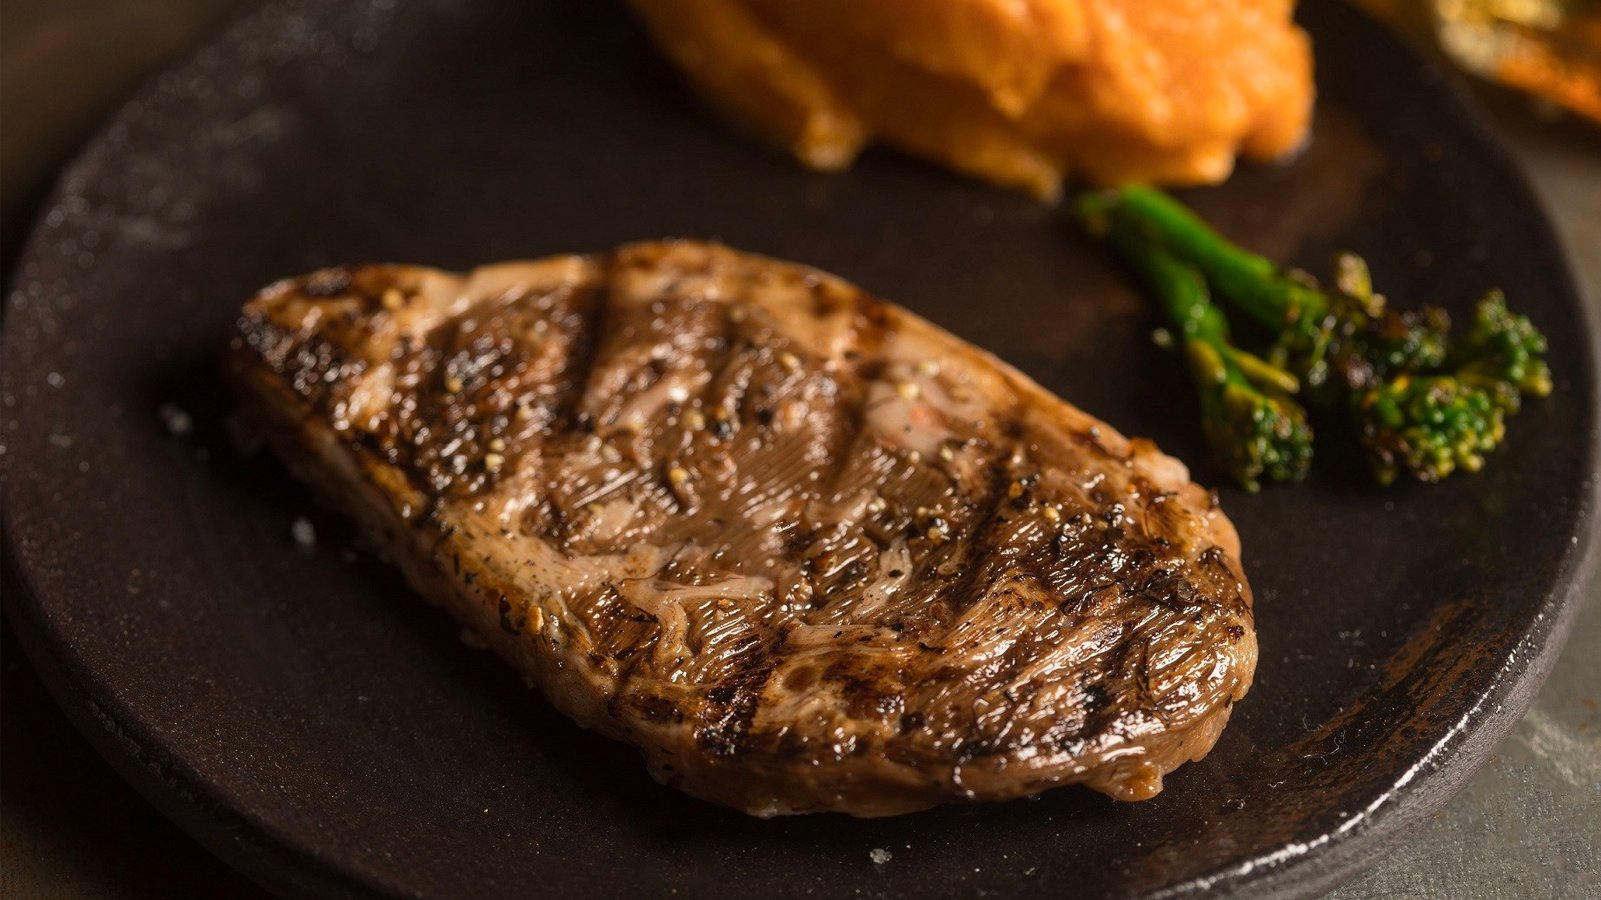 Steakholder Meets: Kashrut and the cultivated meat industry - Steakholder  Foods